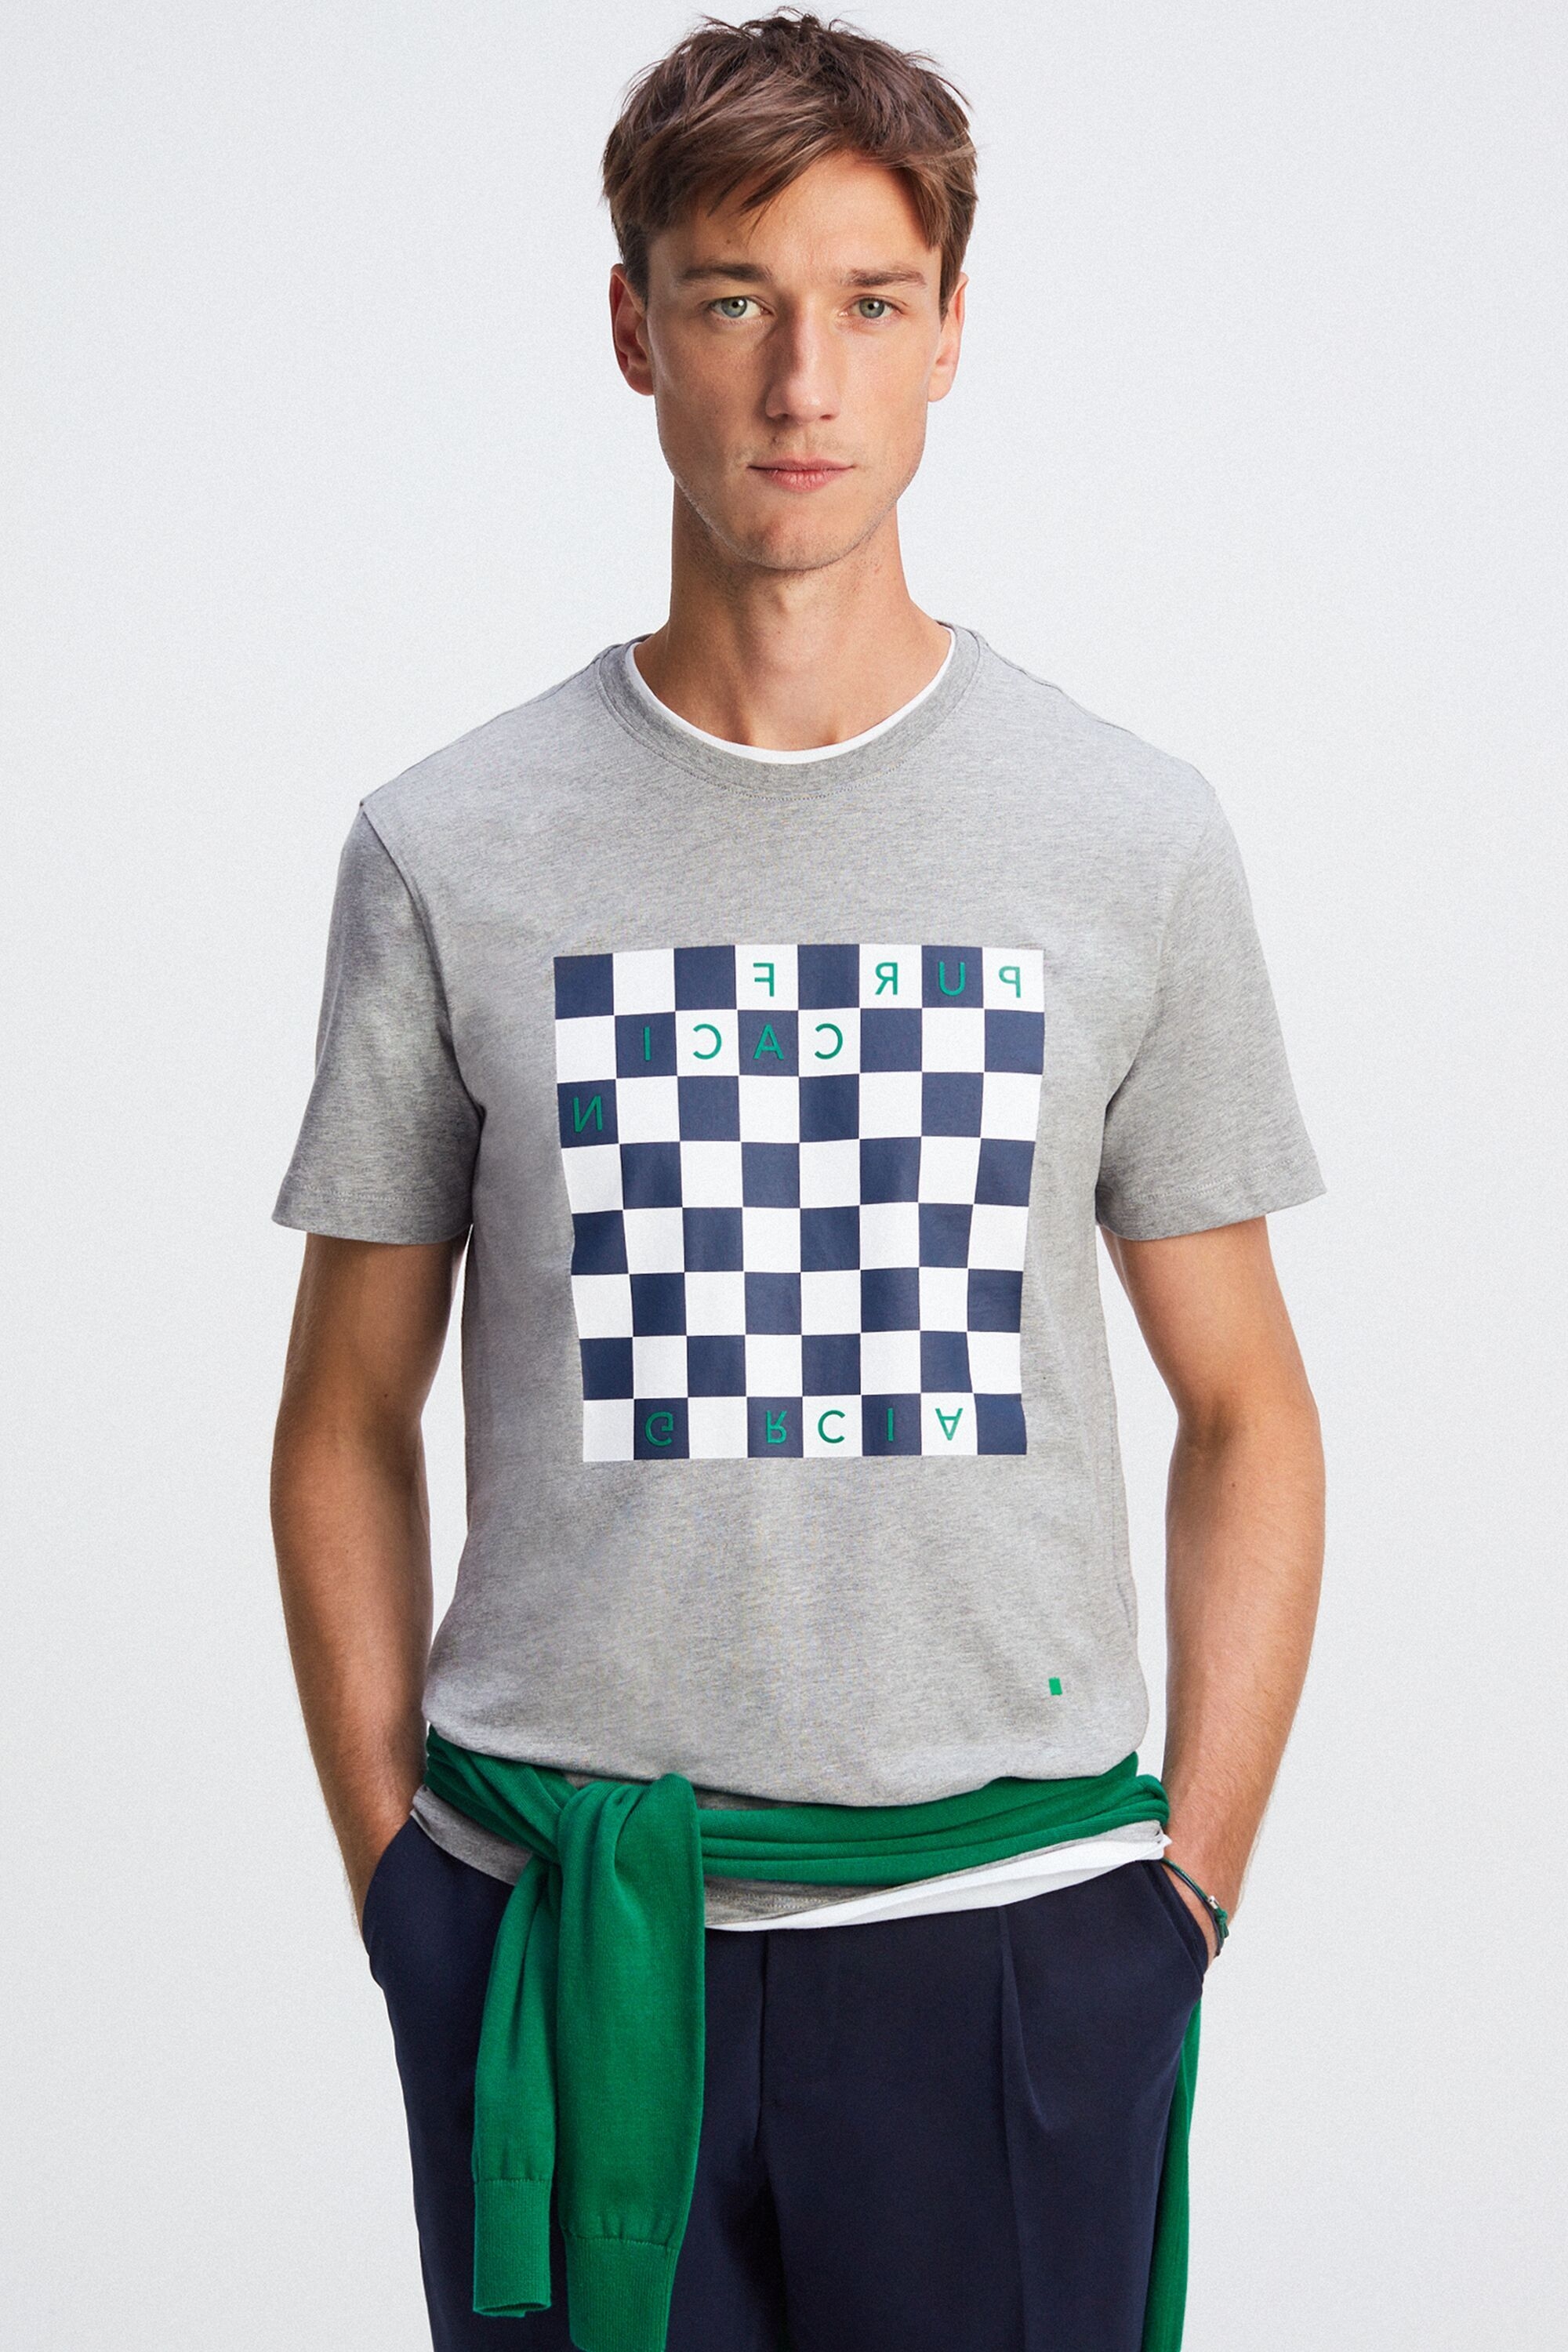 PG Chess printed t-shirt